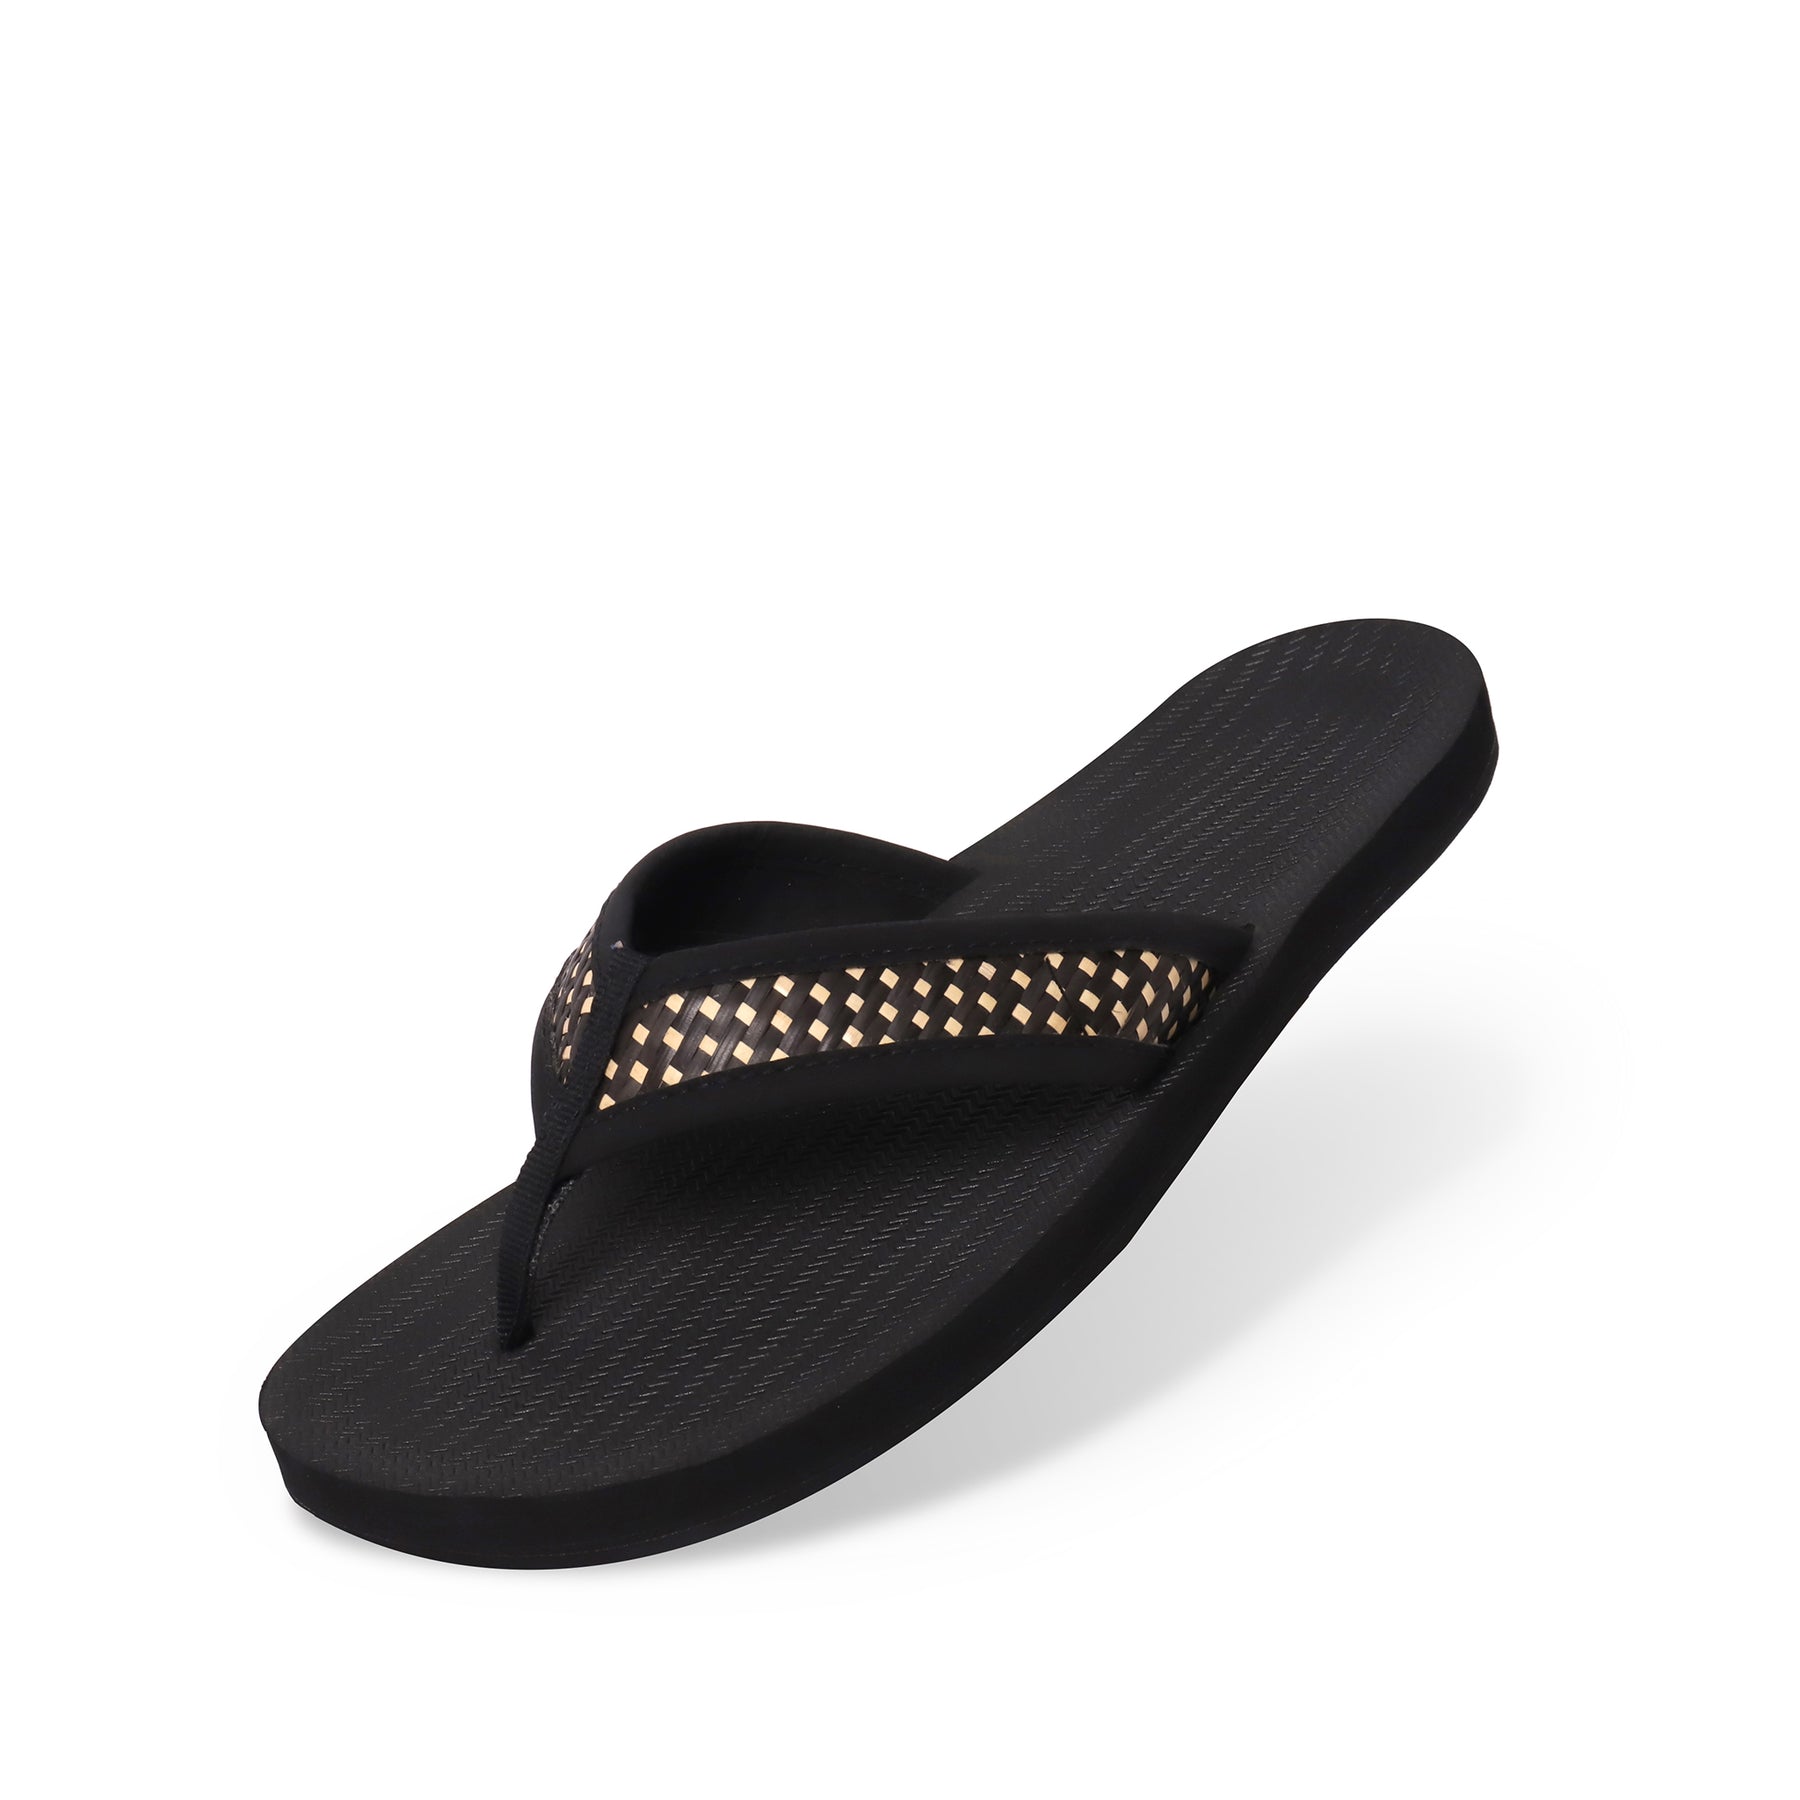 Women's Flip Flops Weave - Black/Batit Dark